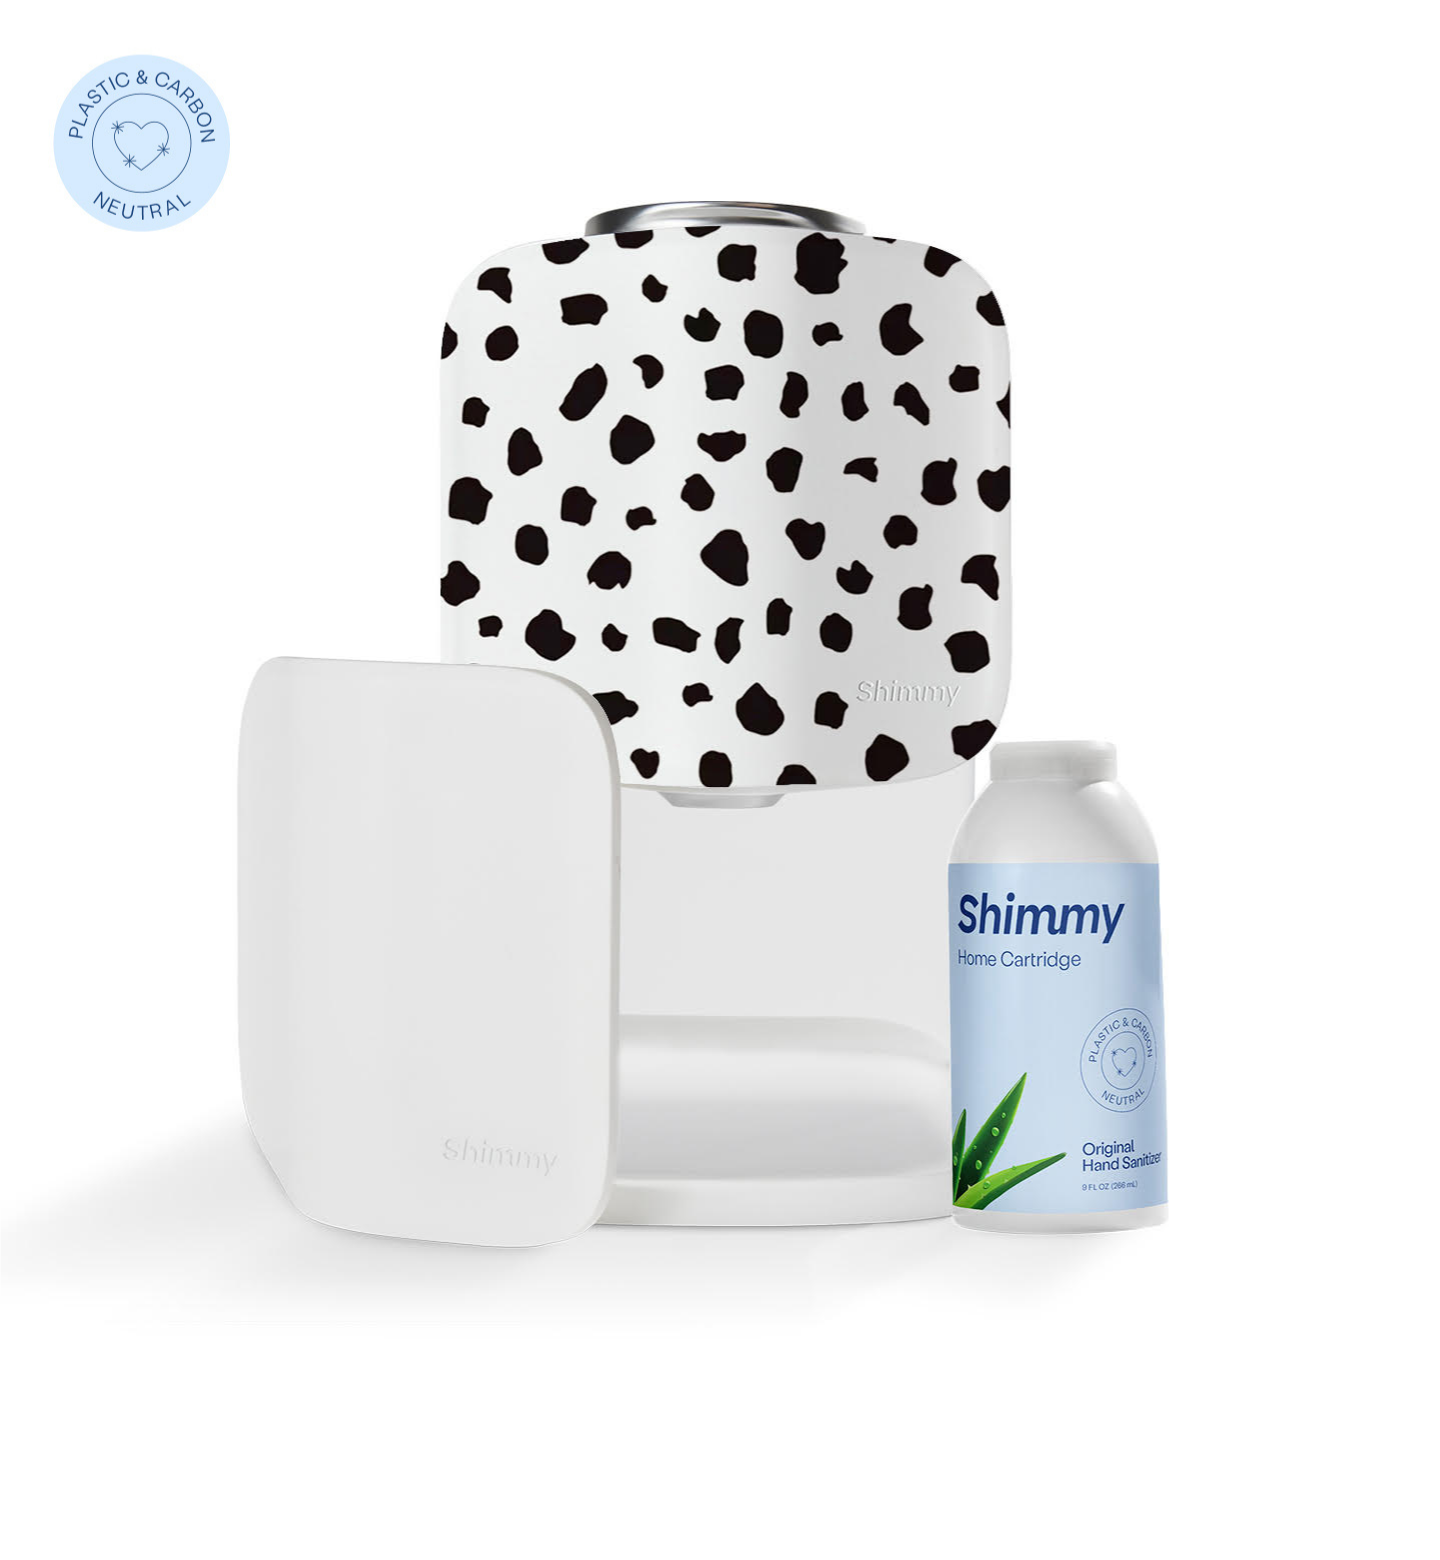 Shimmy Home Dalmatian Bundle + Original Hand Sanitizer [41049932497087] - 41049932497087